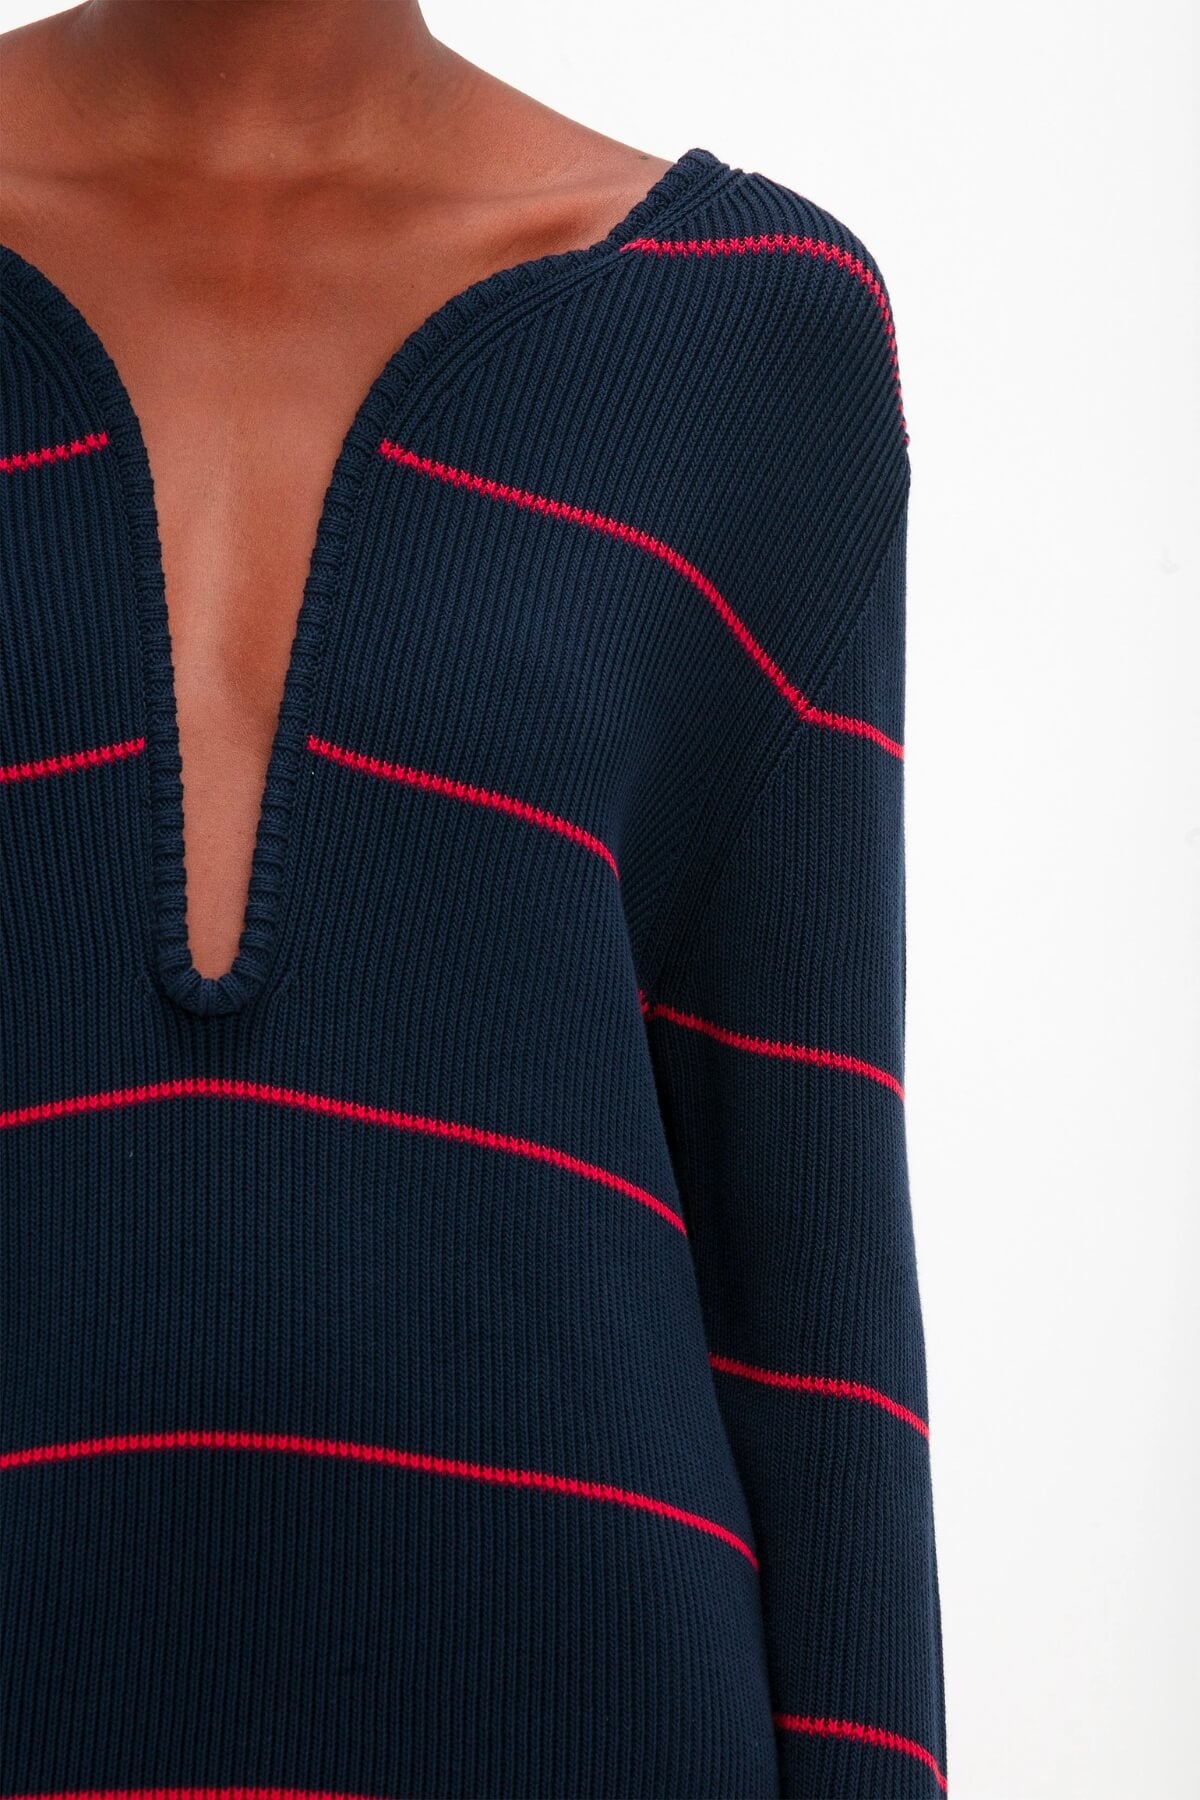 Victoria Beckham Frame Detail Jumper Dress - Navy/ Red